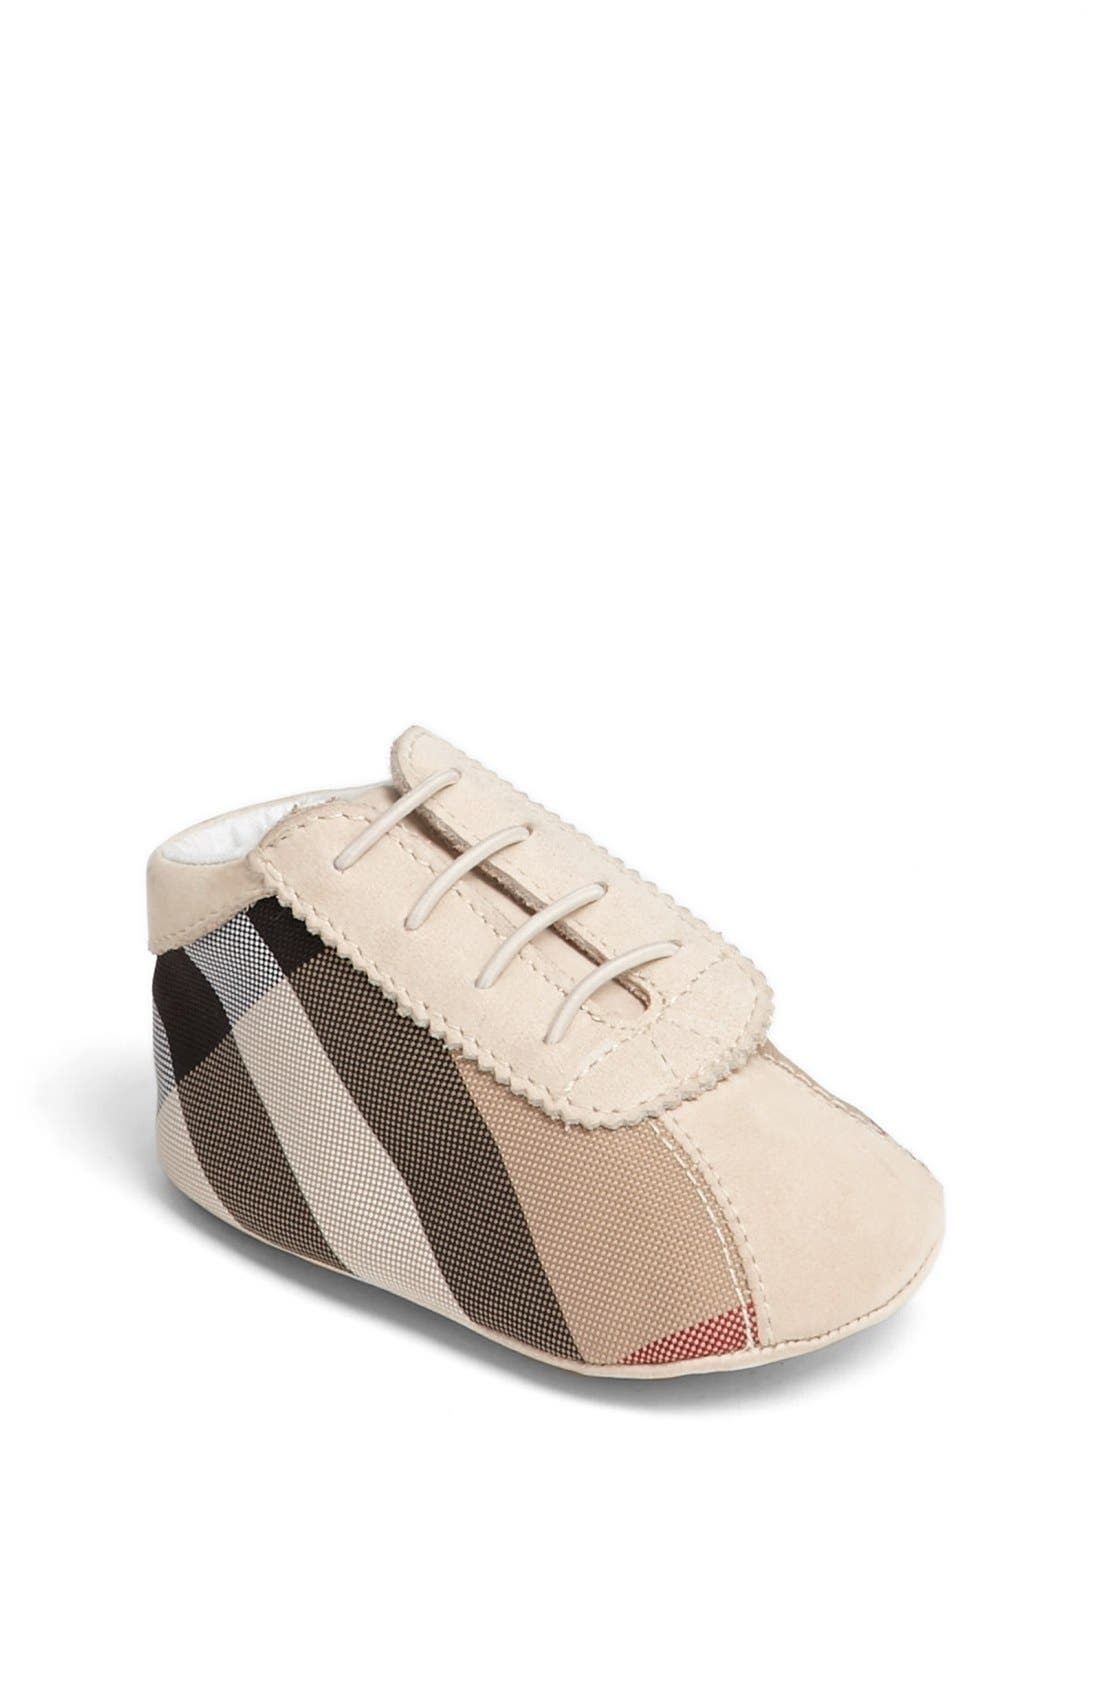 Burberry 'Bosco' Crib Shoe (Baby 